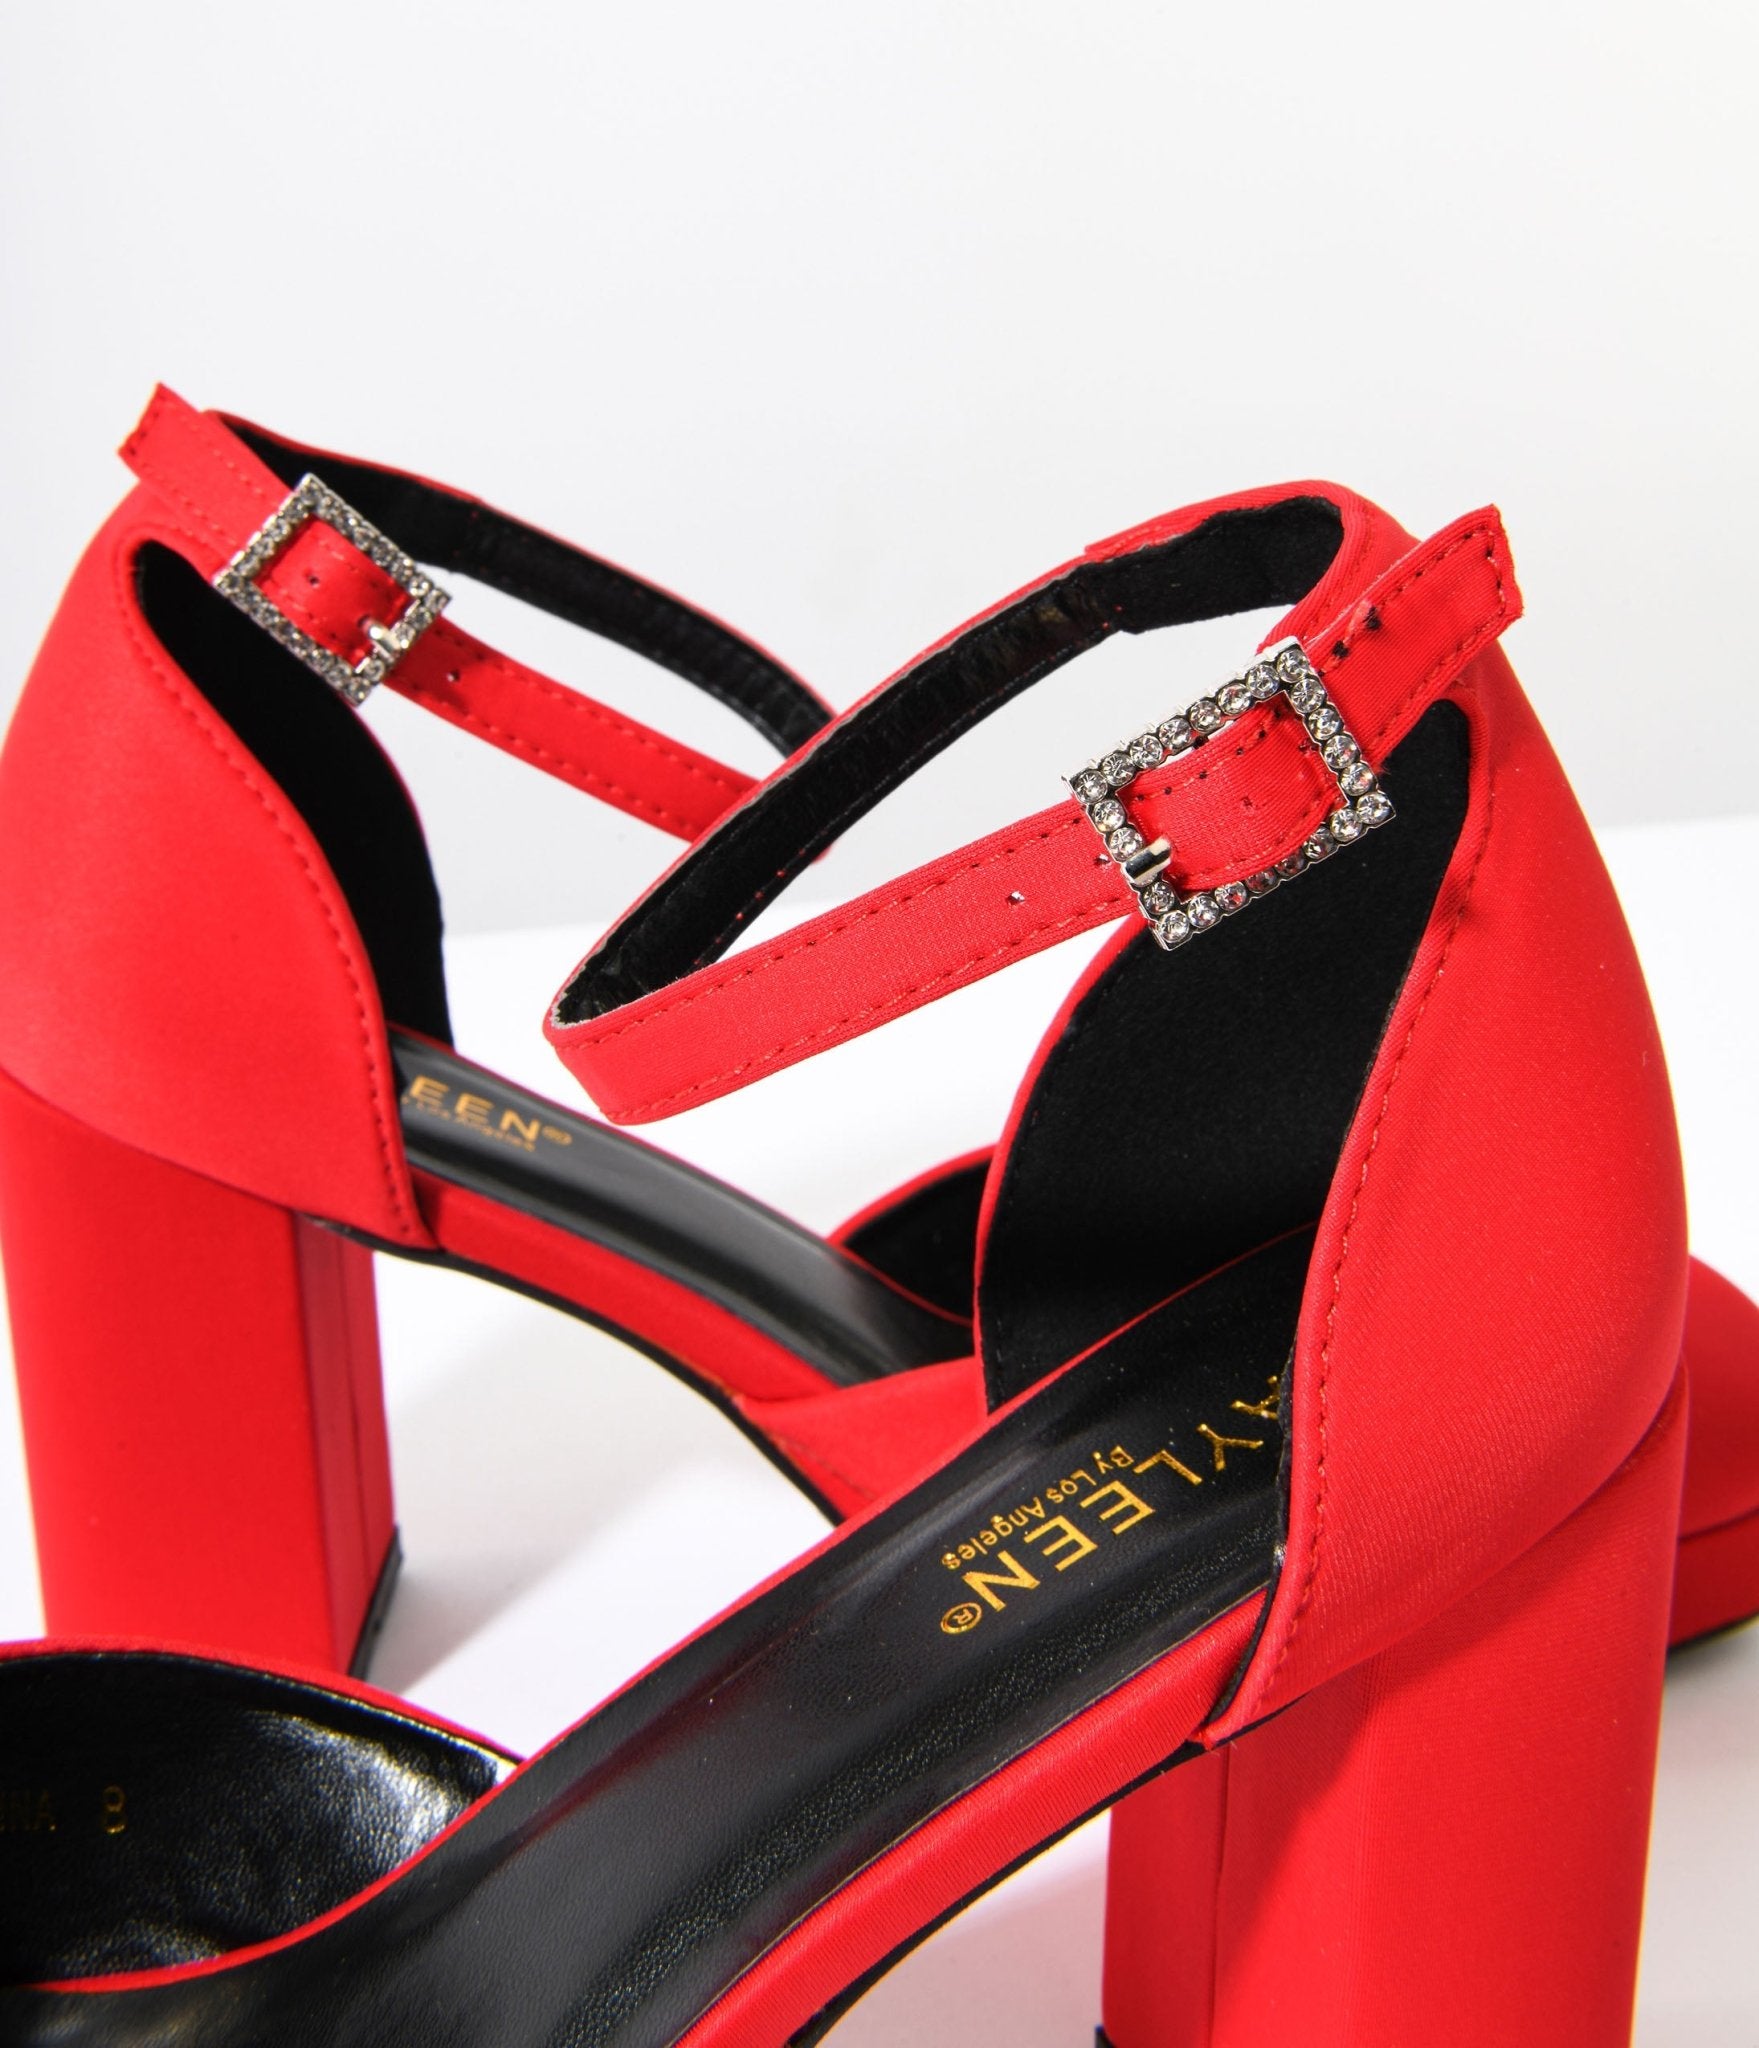 High heels affect how men treat women, French study finds | Metro News